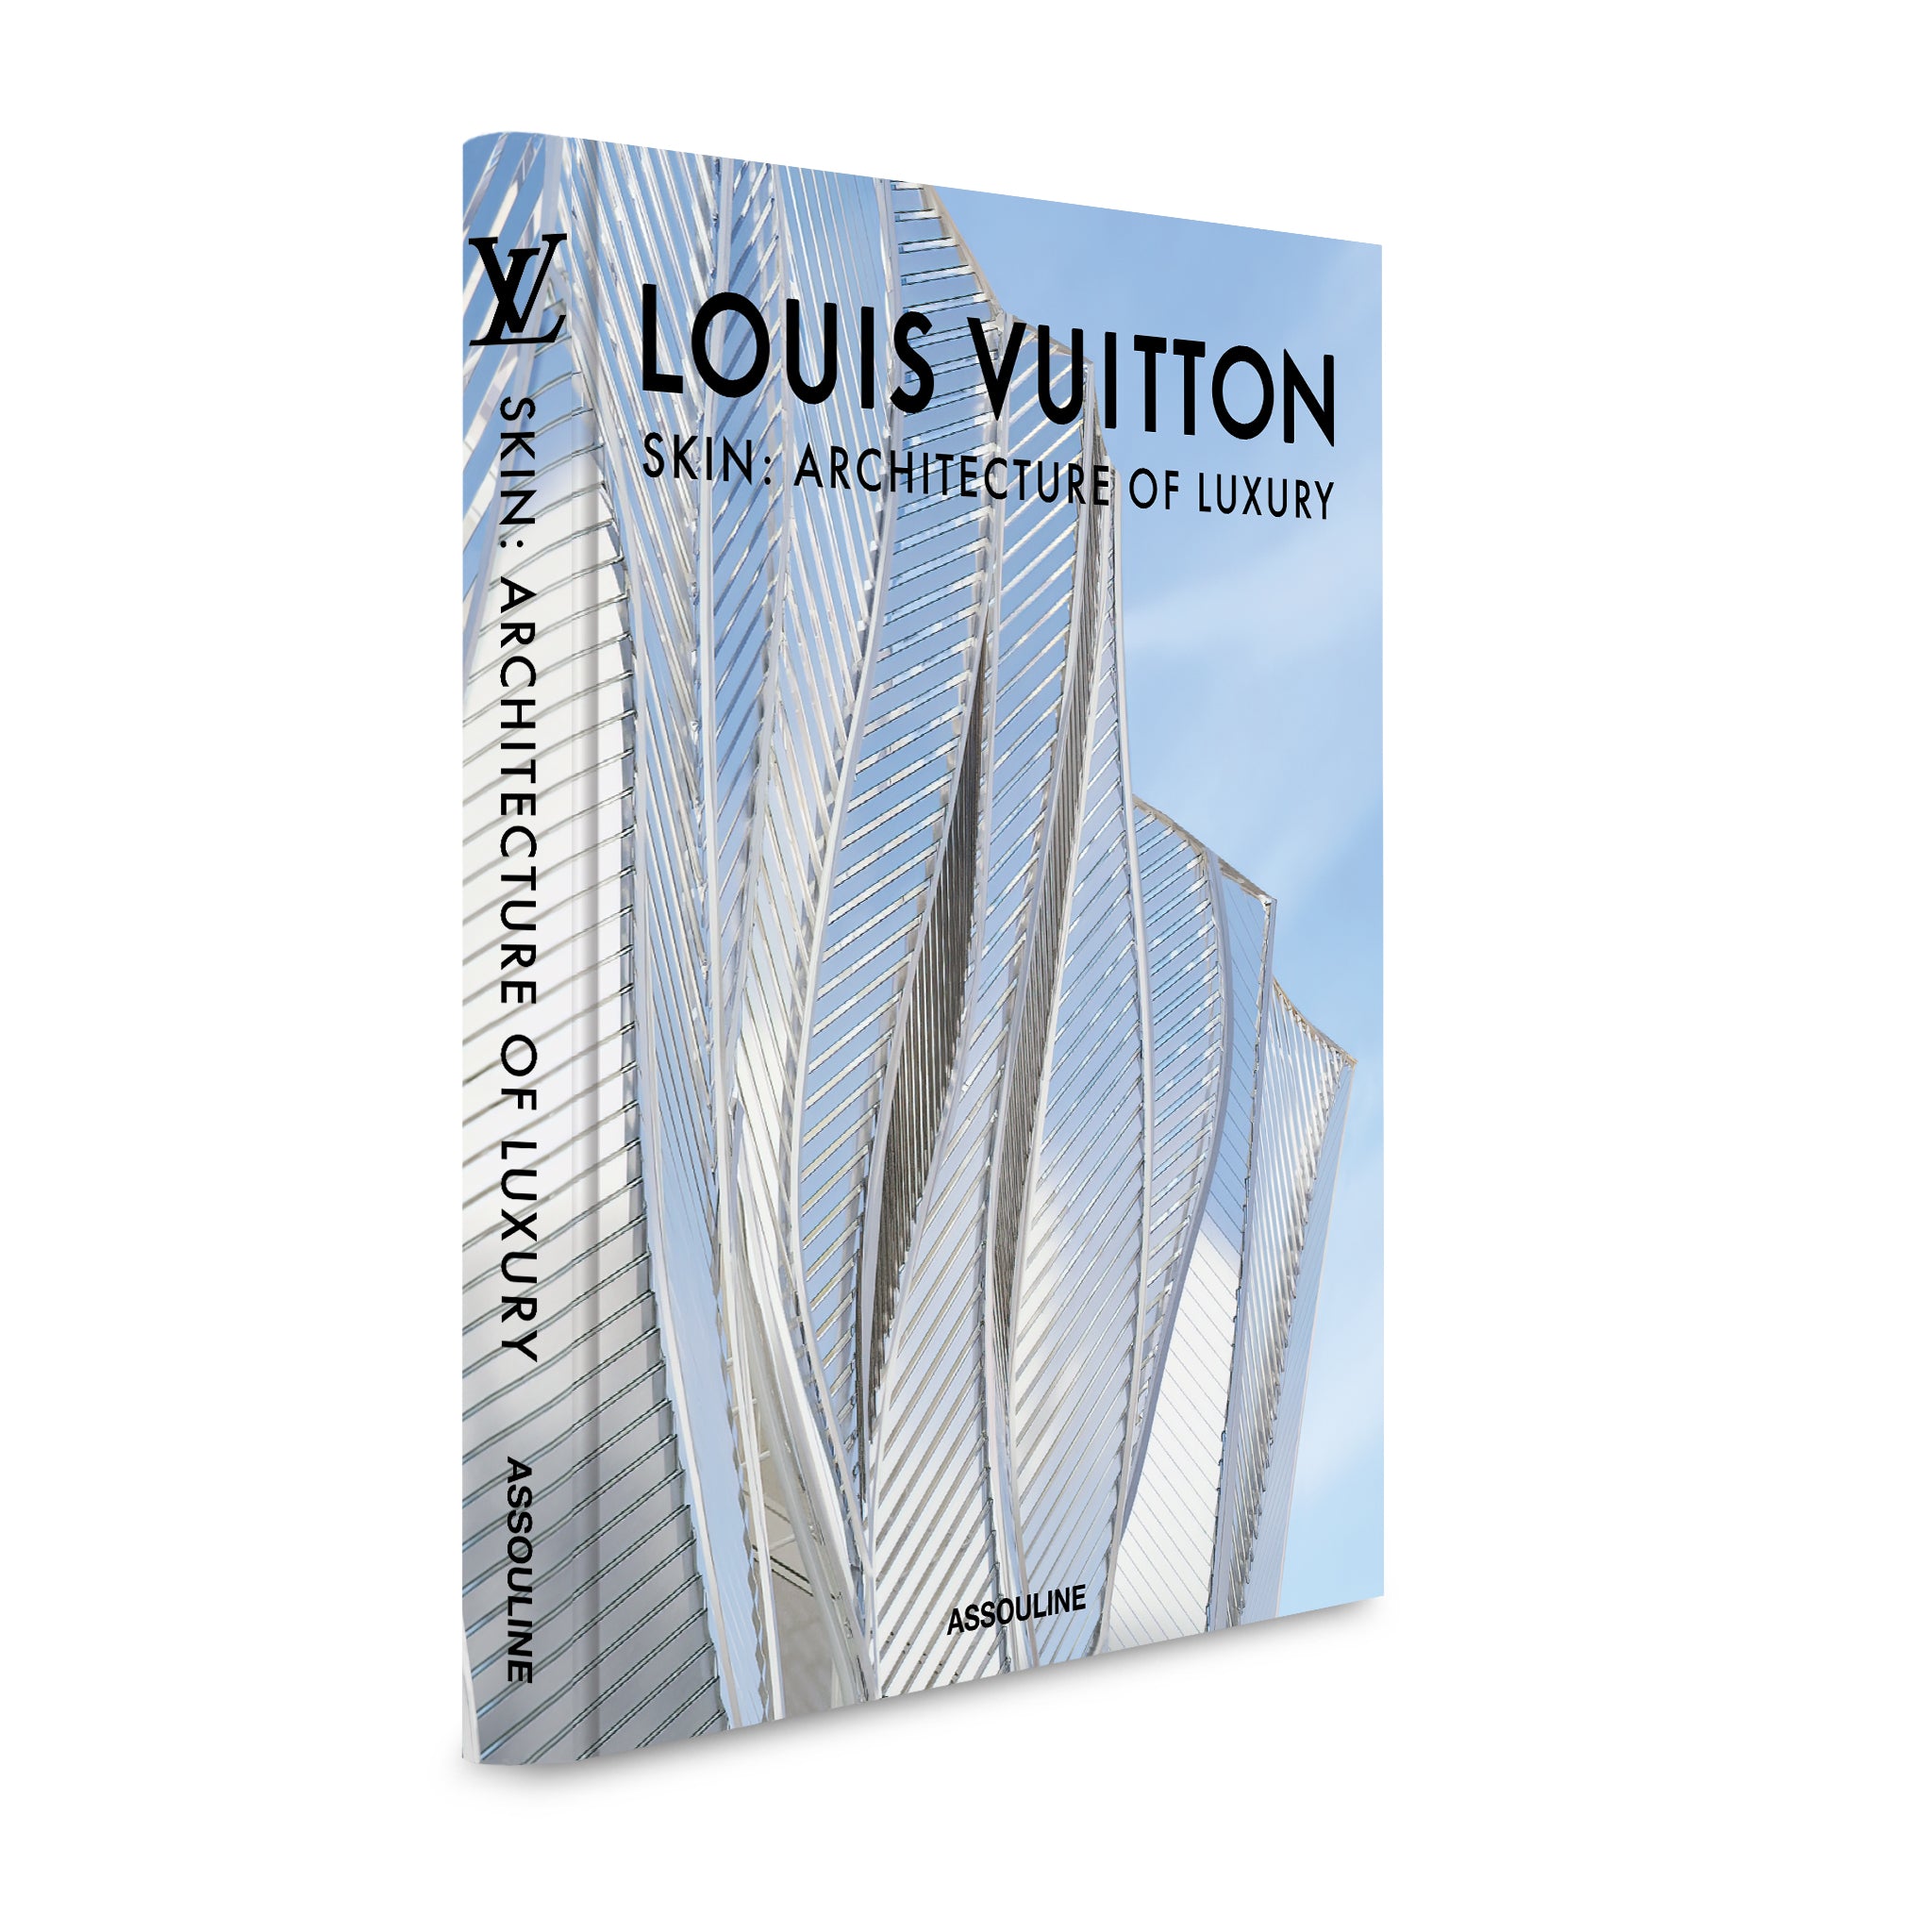 Fondation Louis Vuitton Beijing